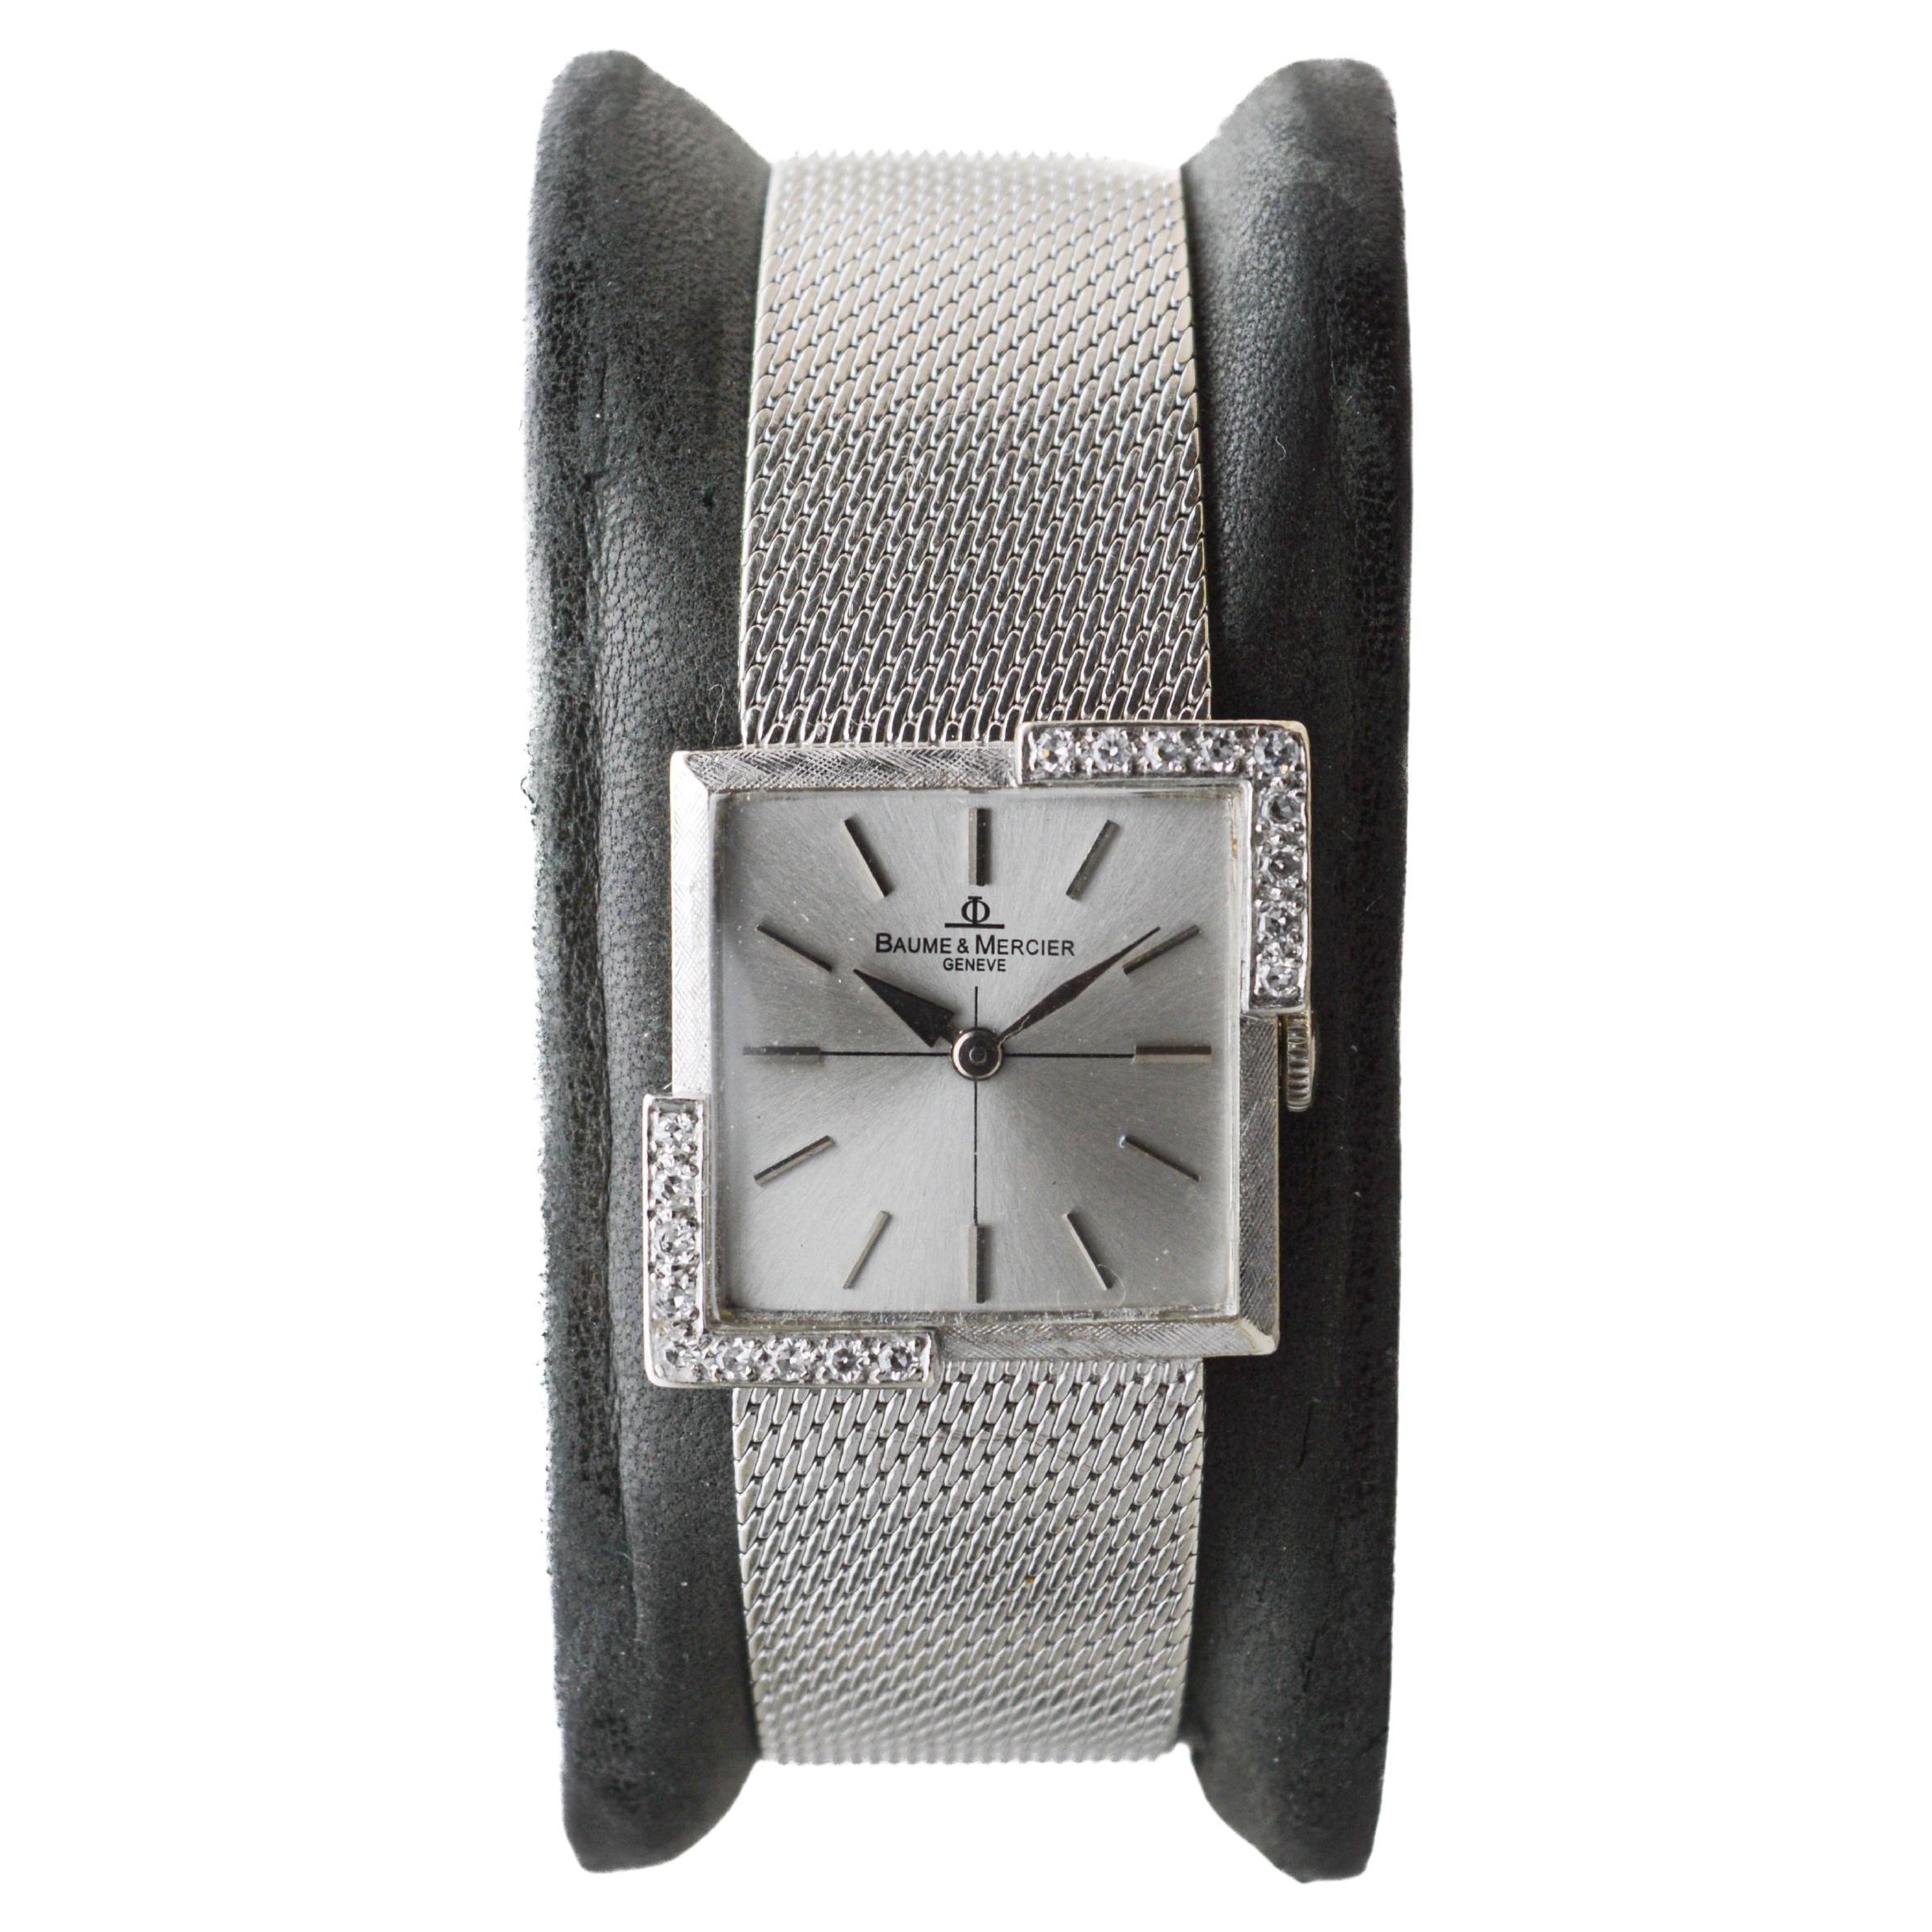 Baume Mercier 14Kt. Solid White Gold Bracelet Watch with